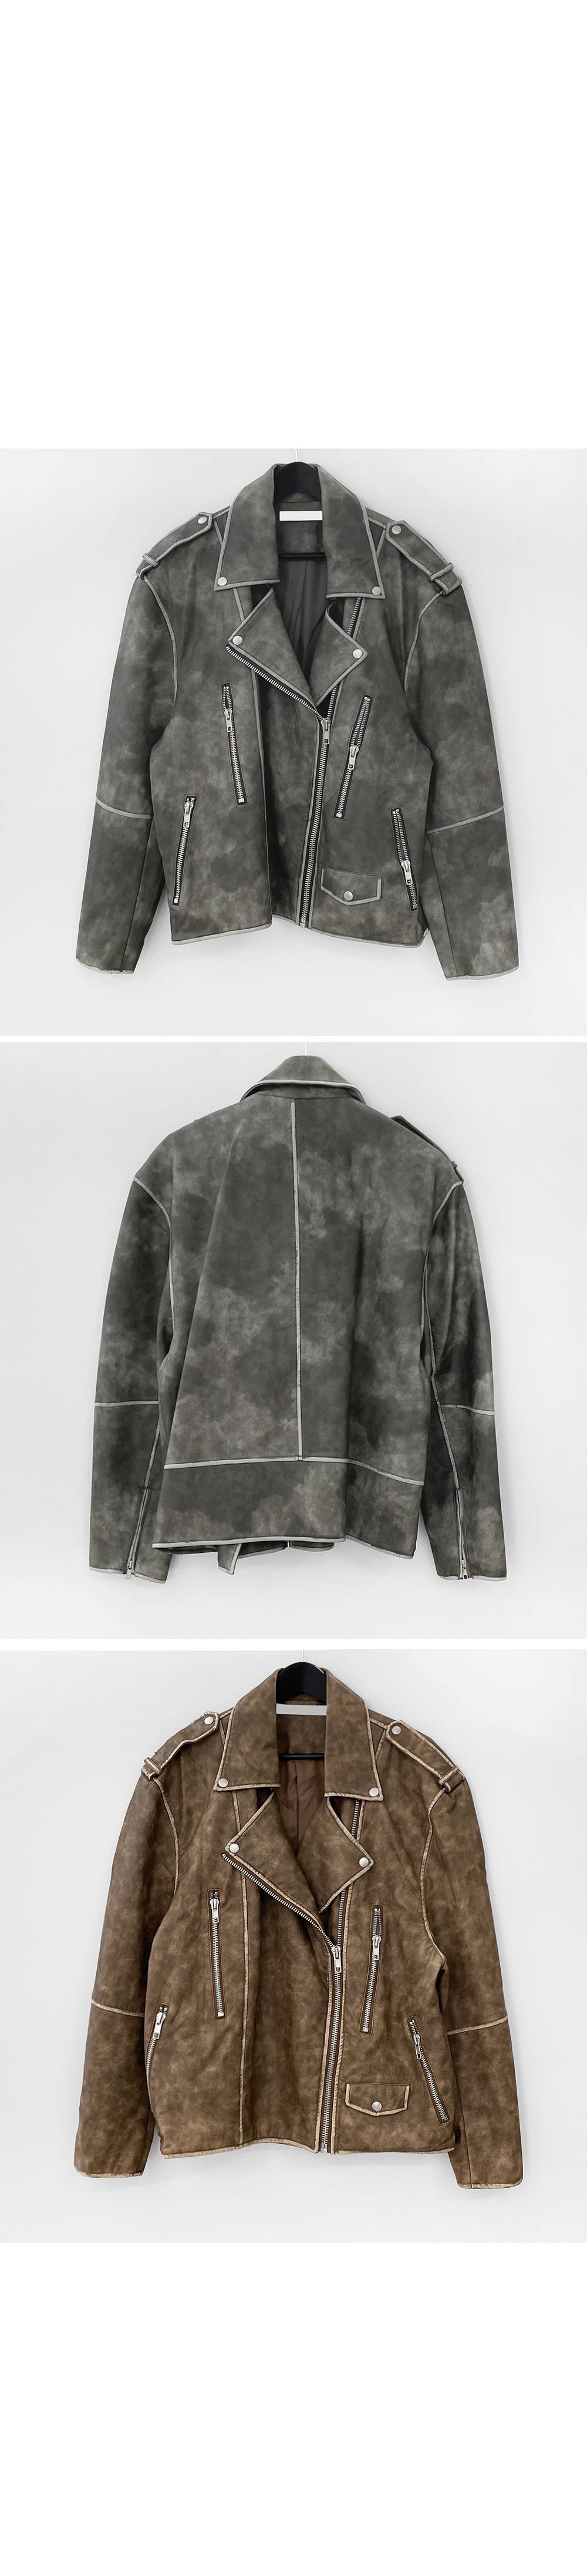 jacket grey color image-S1L14